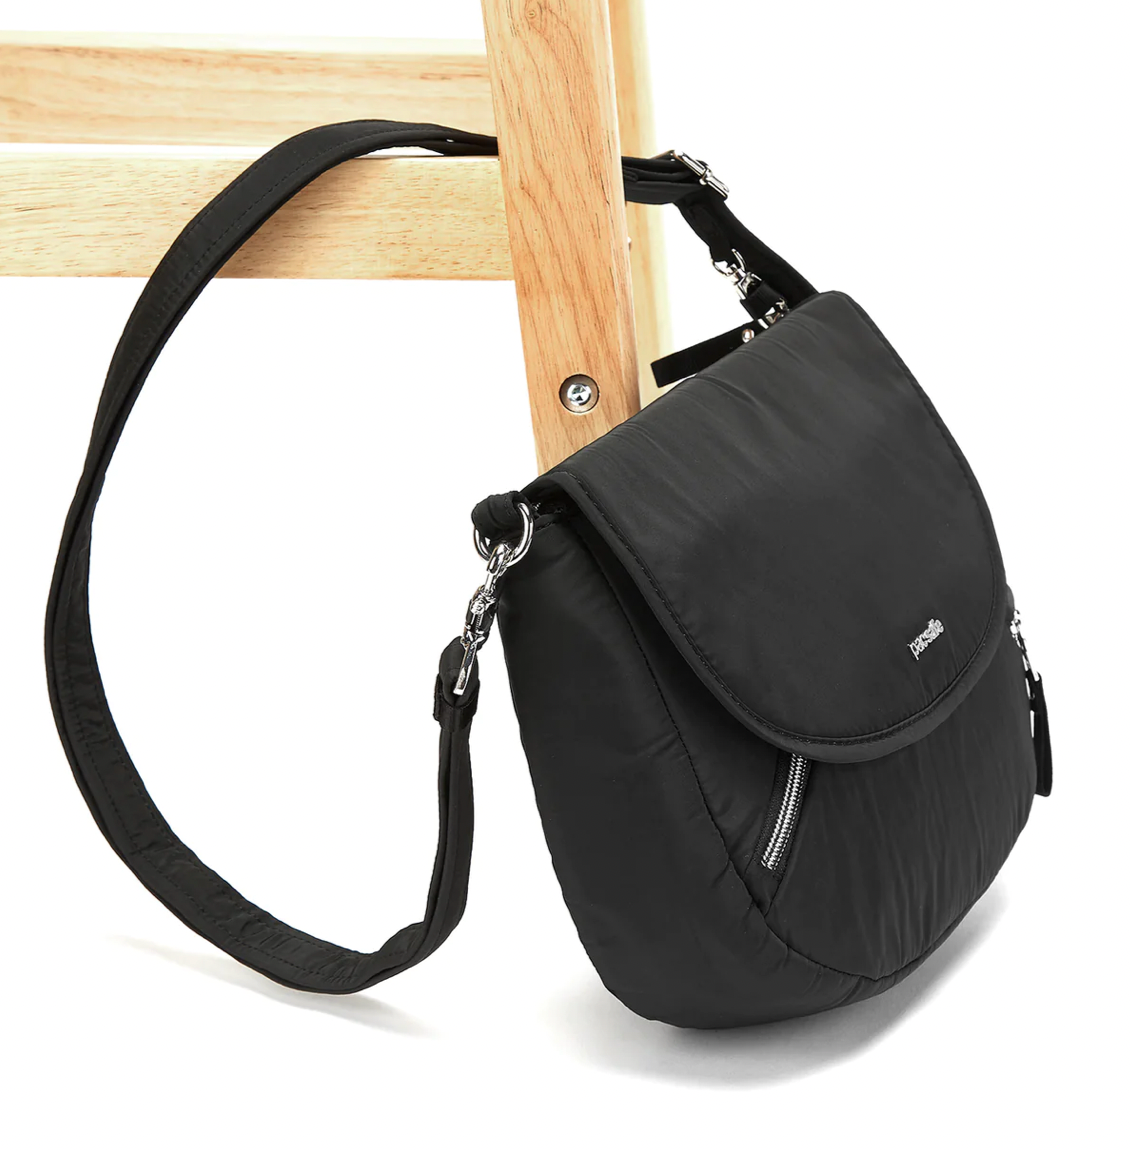 Pacsafe Stylesafe Crossbody anti-theft handbag